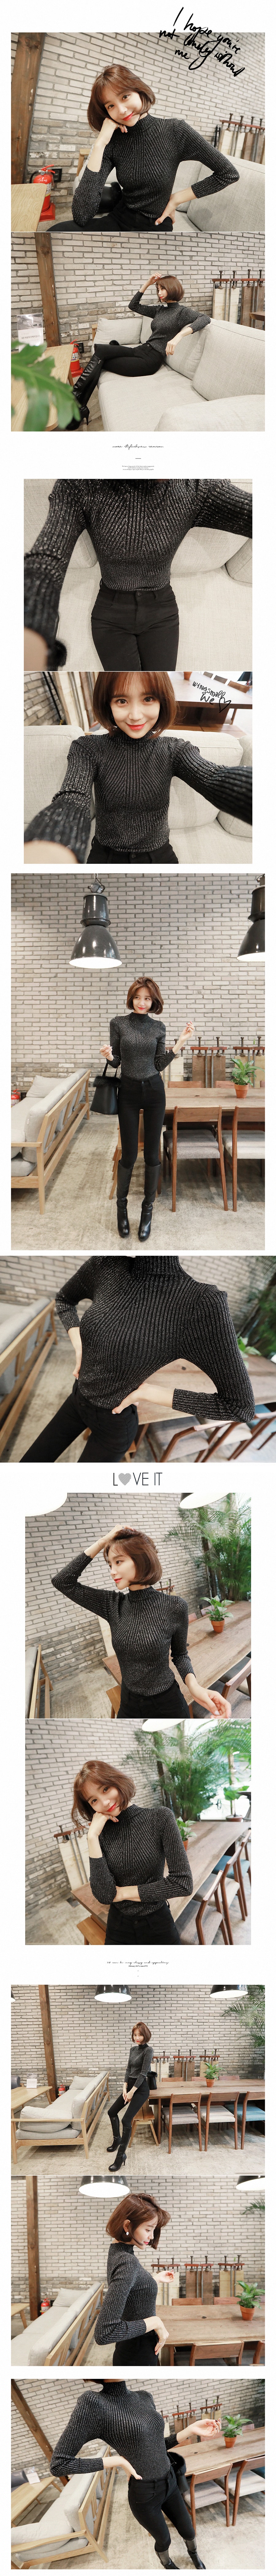 KOREA Metallic Ribbed Knit Top Black One Size(S-M) [Free Shipping]